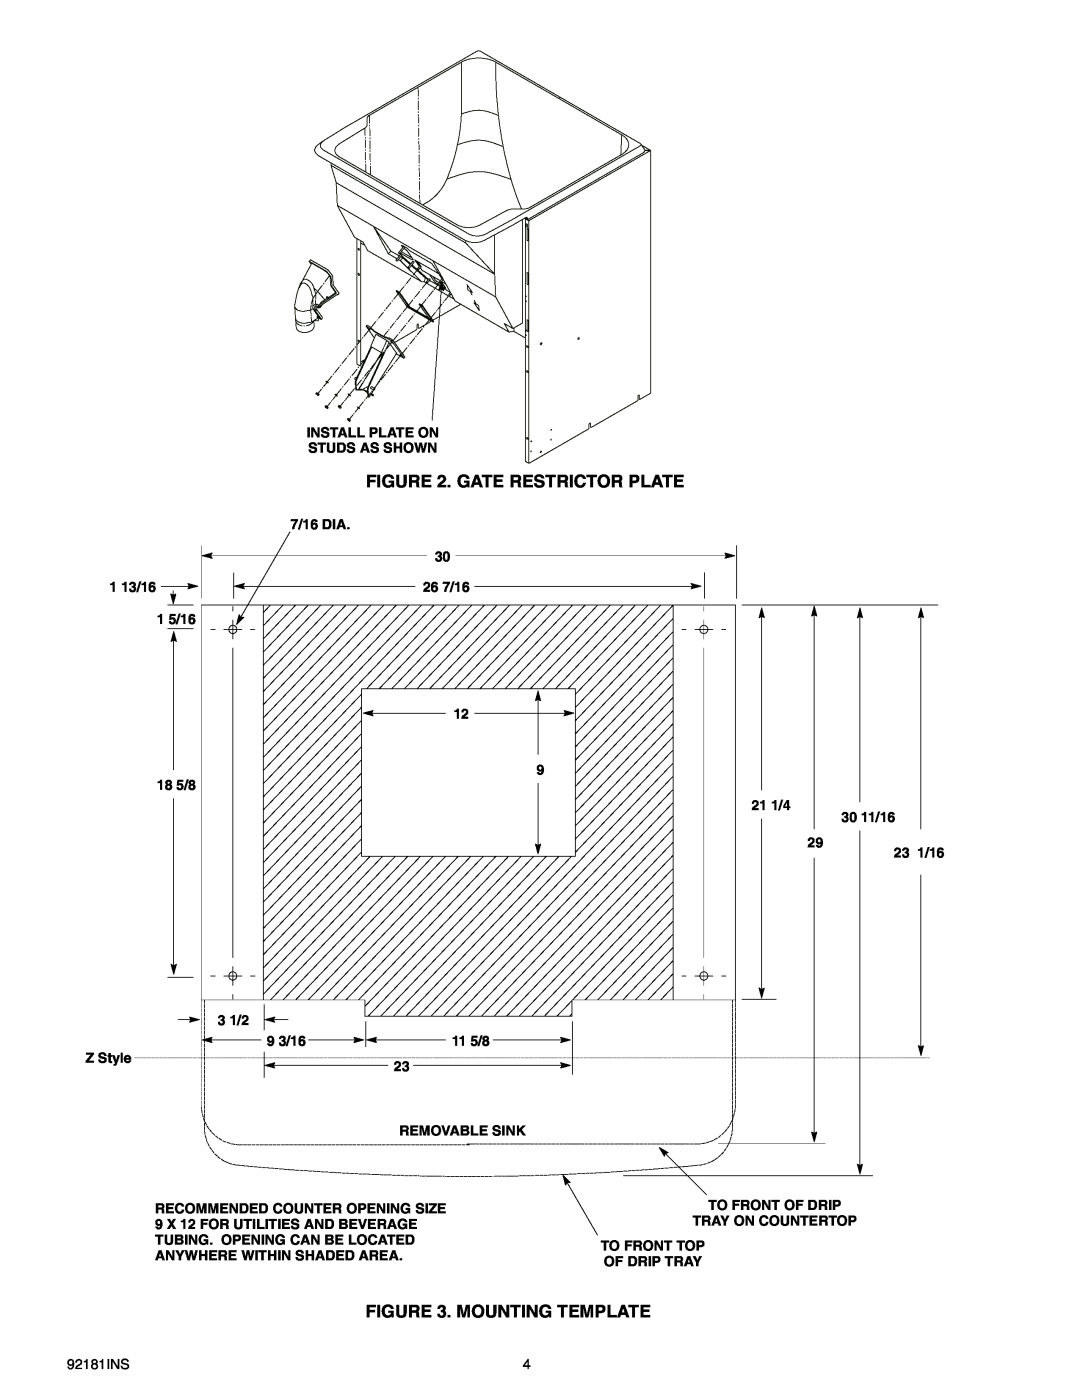 Cornelius Enduro-200/250 installation manual Gate Restrictor Plate, Mounting Template 